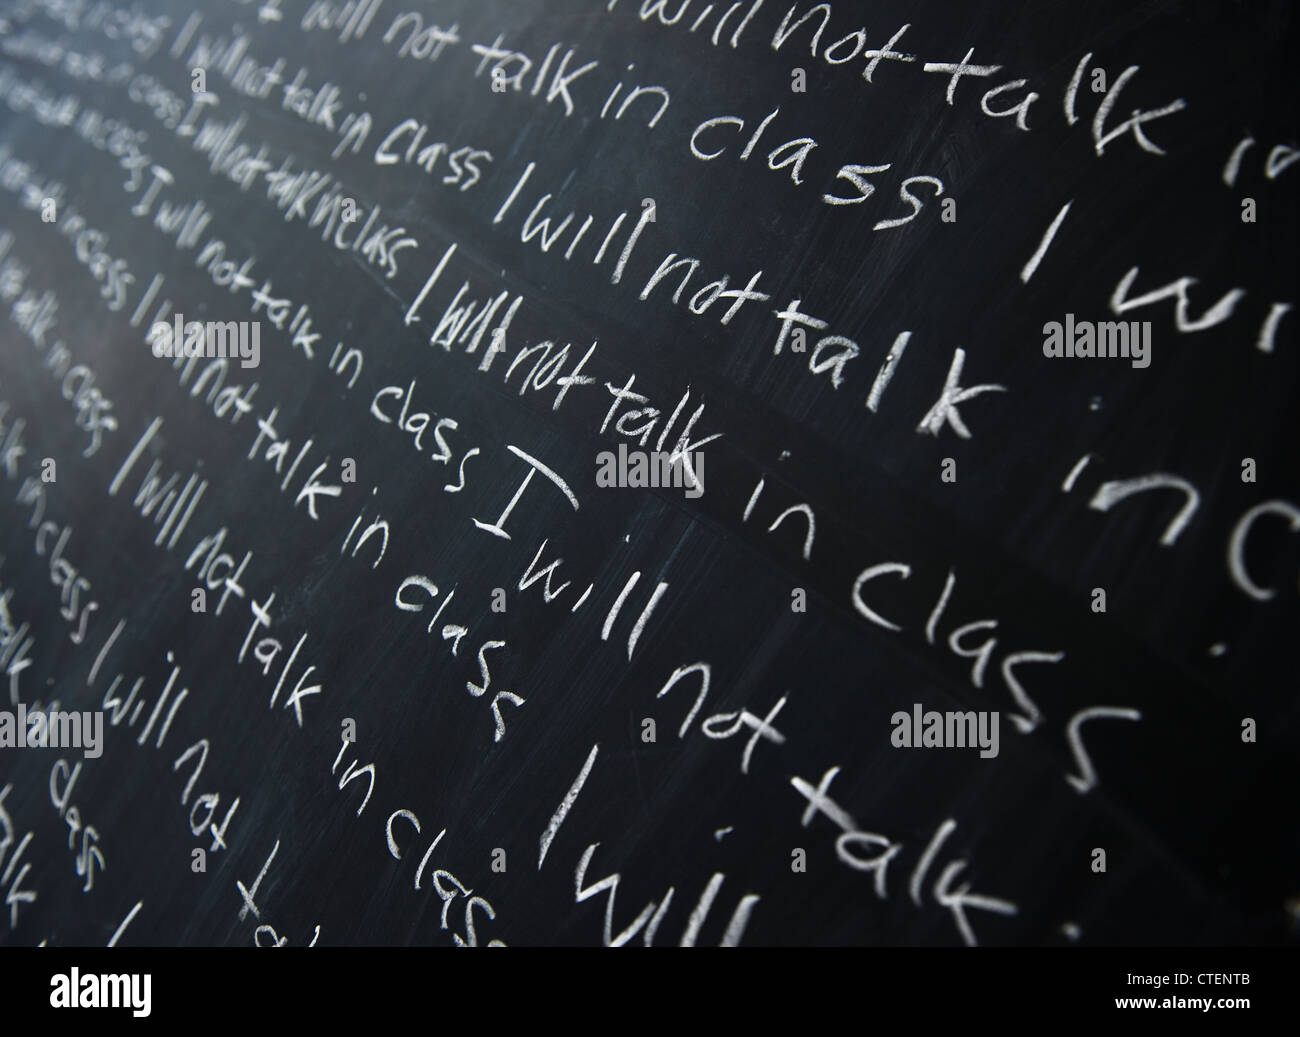 USA, New Jersey, Jersey City, Blackboard with writing lines Stock Photo